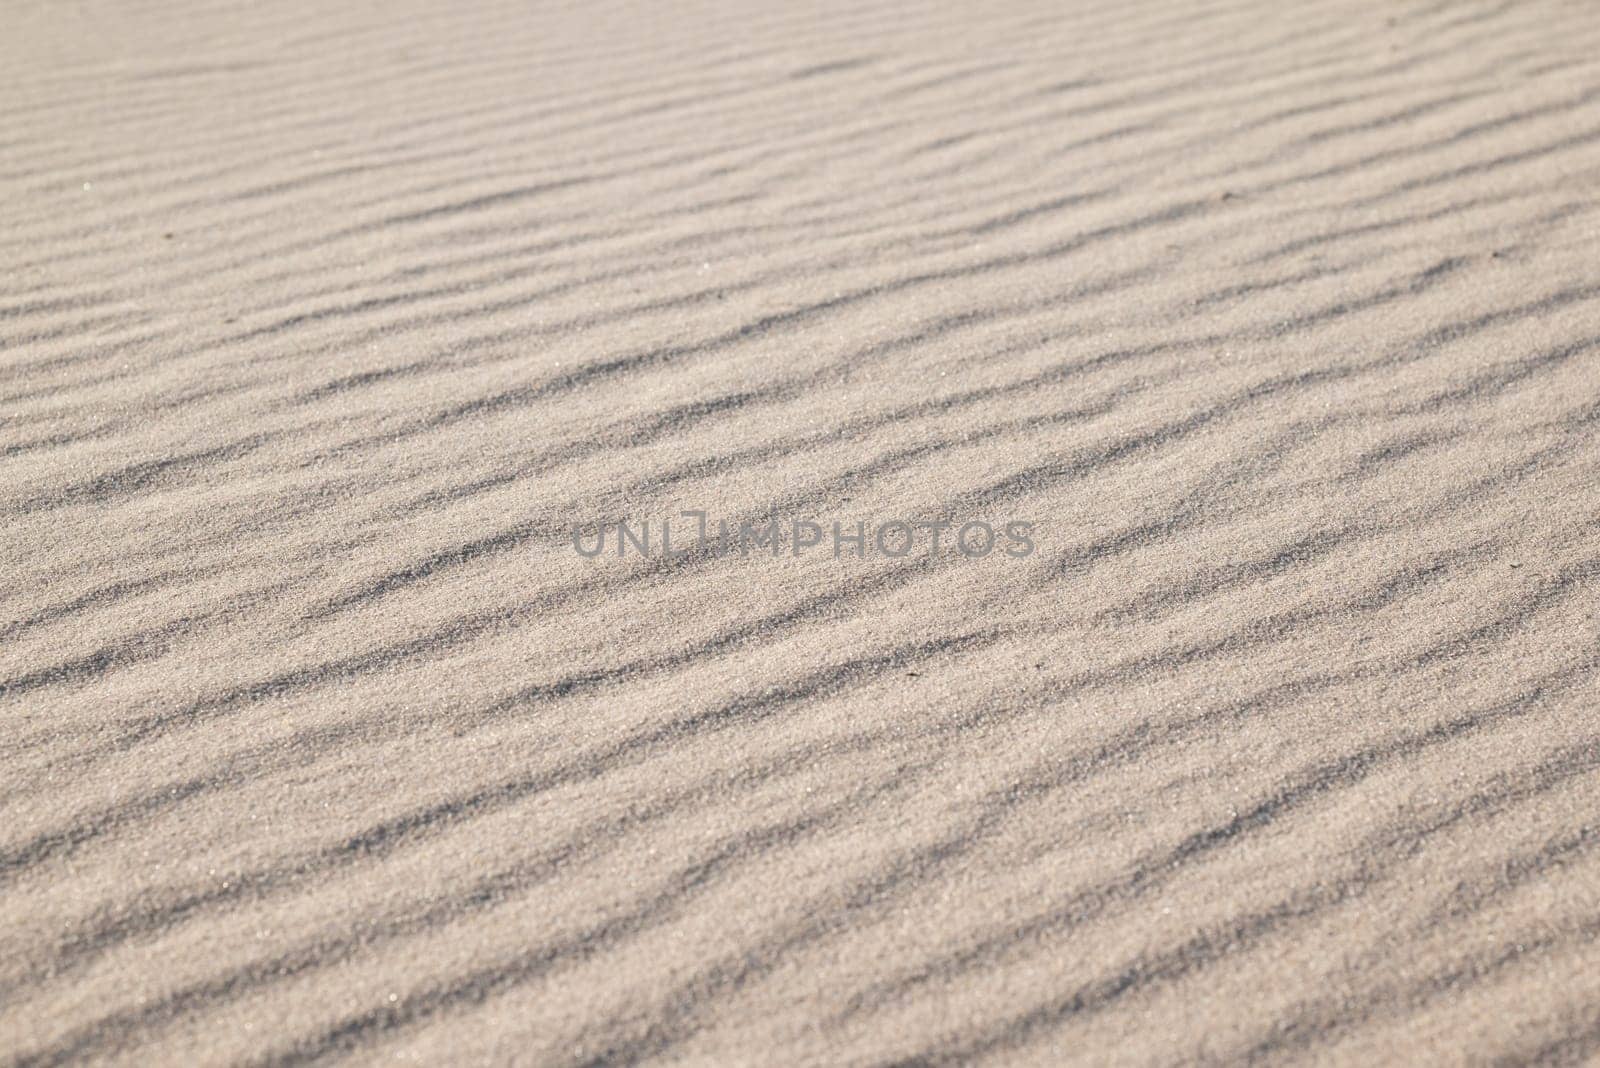 Sand beach with waves by VitaliiPetrushenko